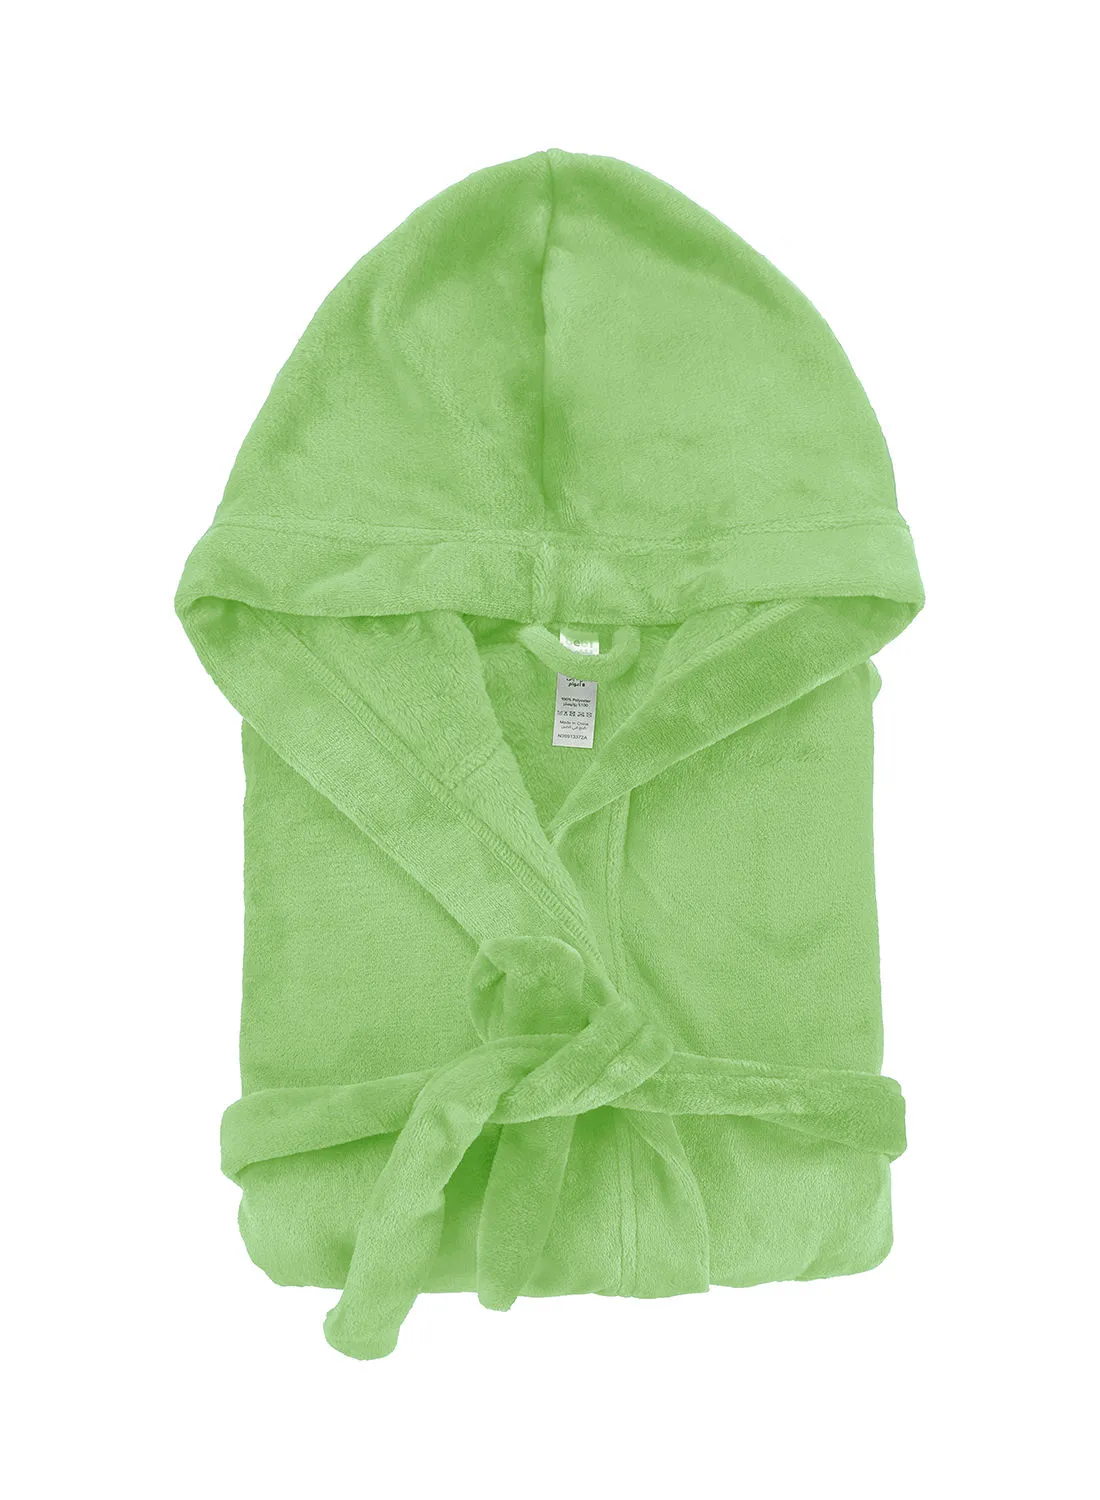 Bebi Bebi Kids Bathroom Towel Set - 255 GSM 100% Cotton - Light Green Color - Lightweight - Kids Hooded Comfortable - For Girls & Boys - 1 Piece